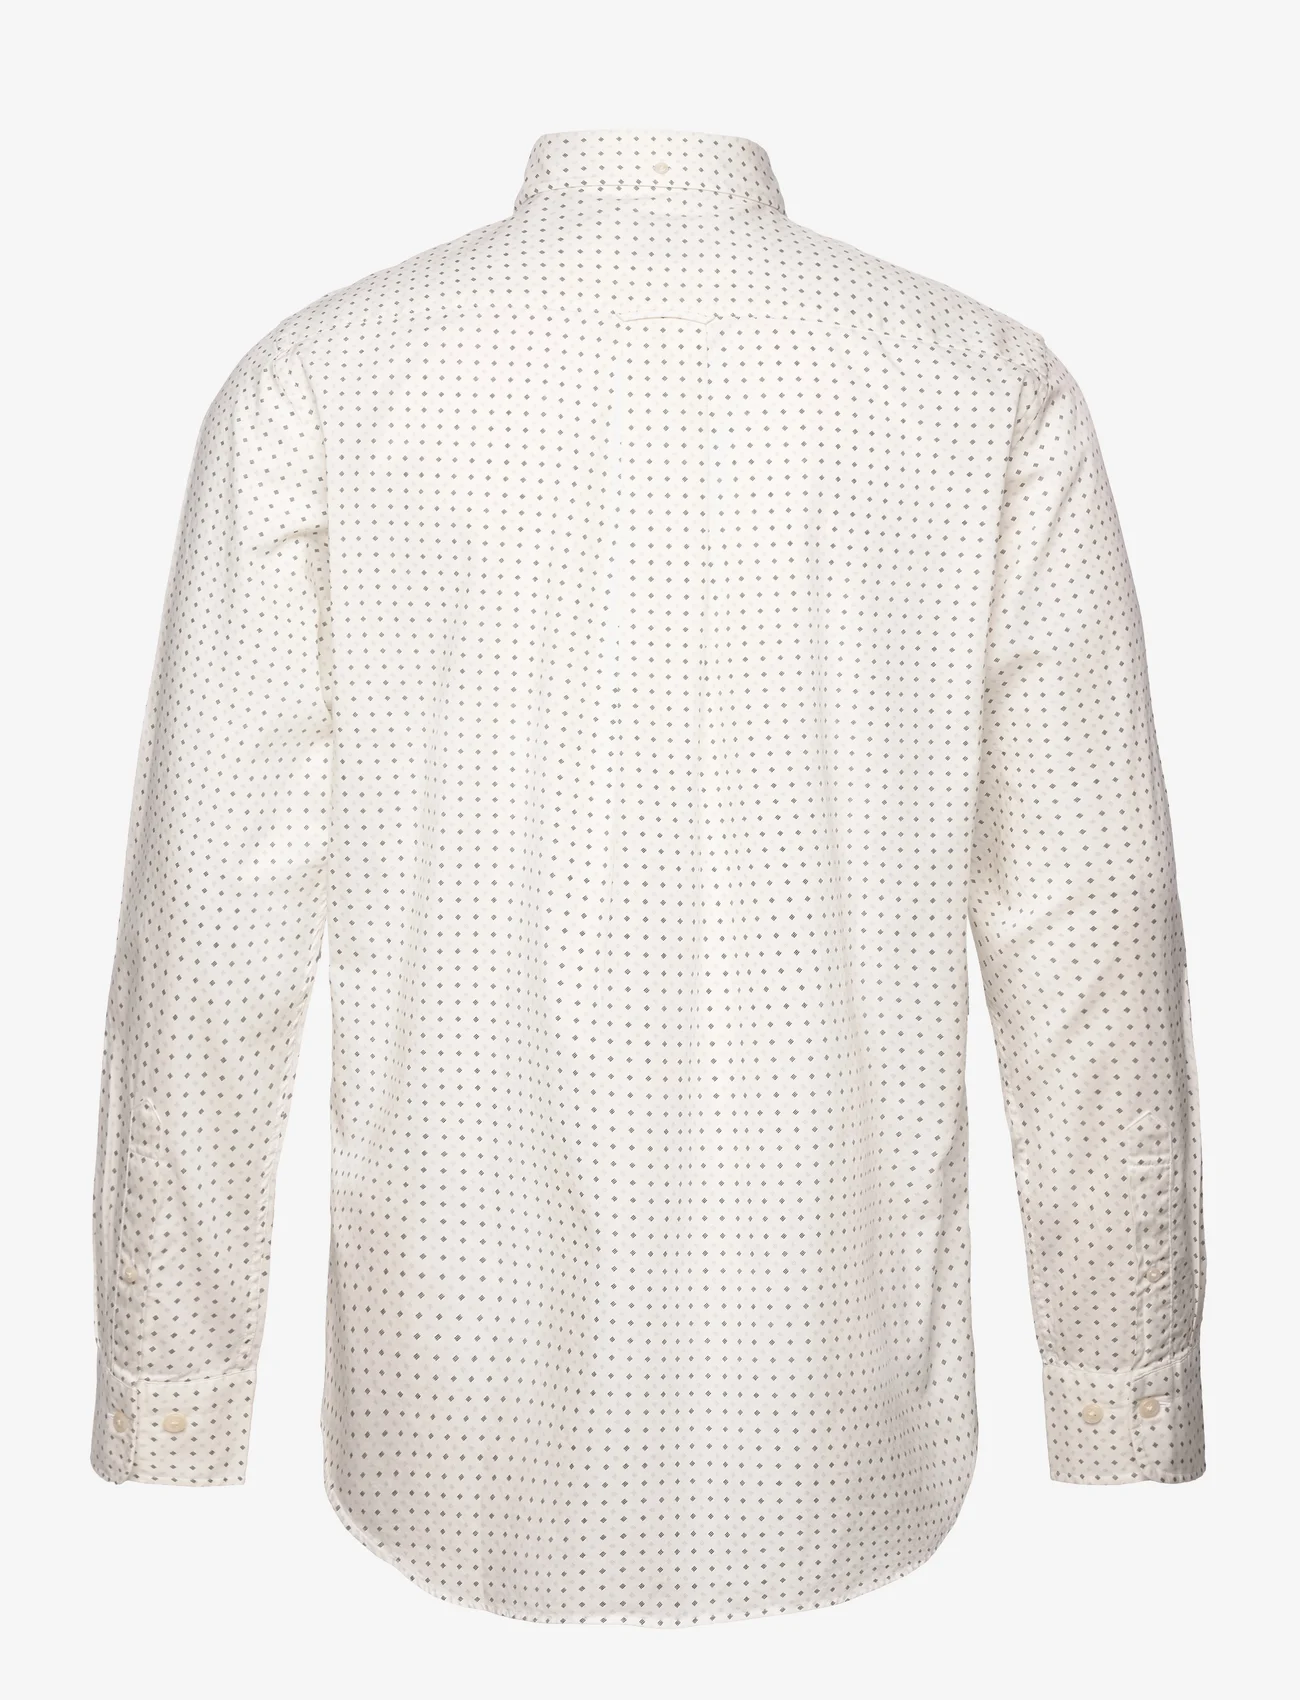 GANT - REG MICRO PRINT SHIRT - short-sleeved shirts - eggshell - 1